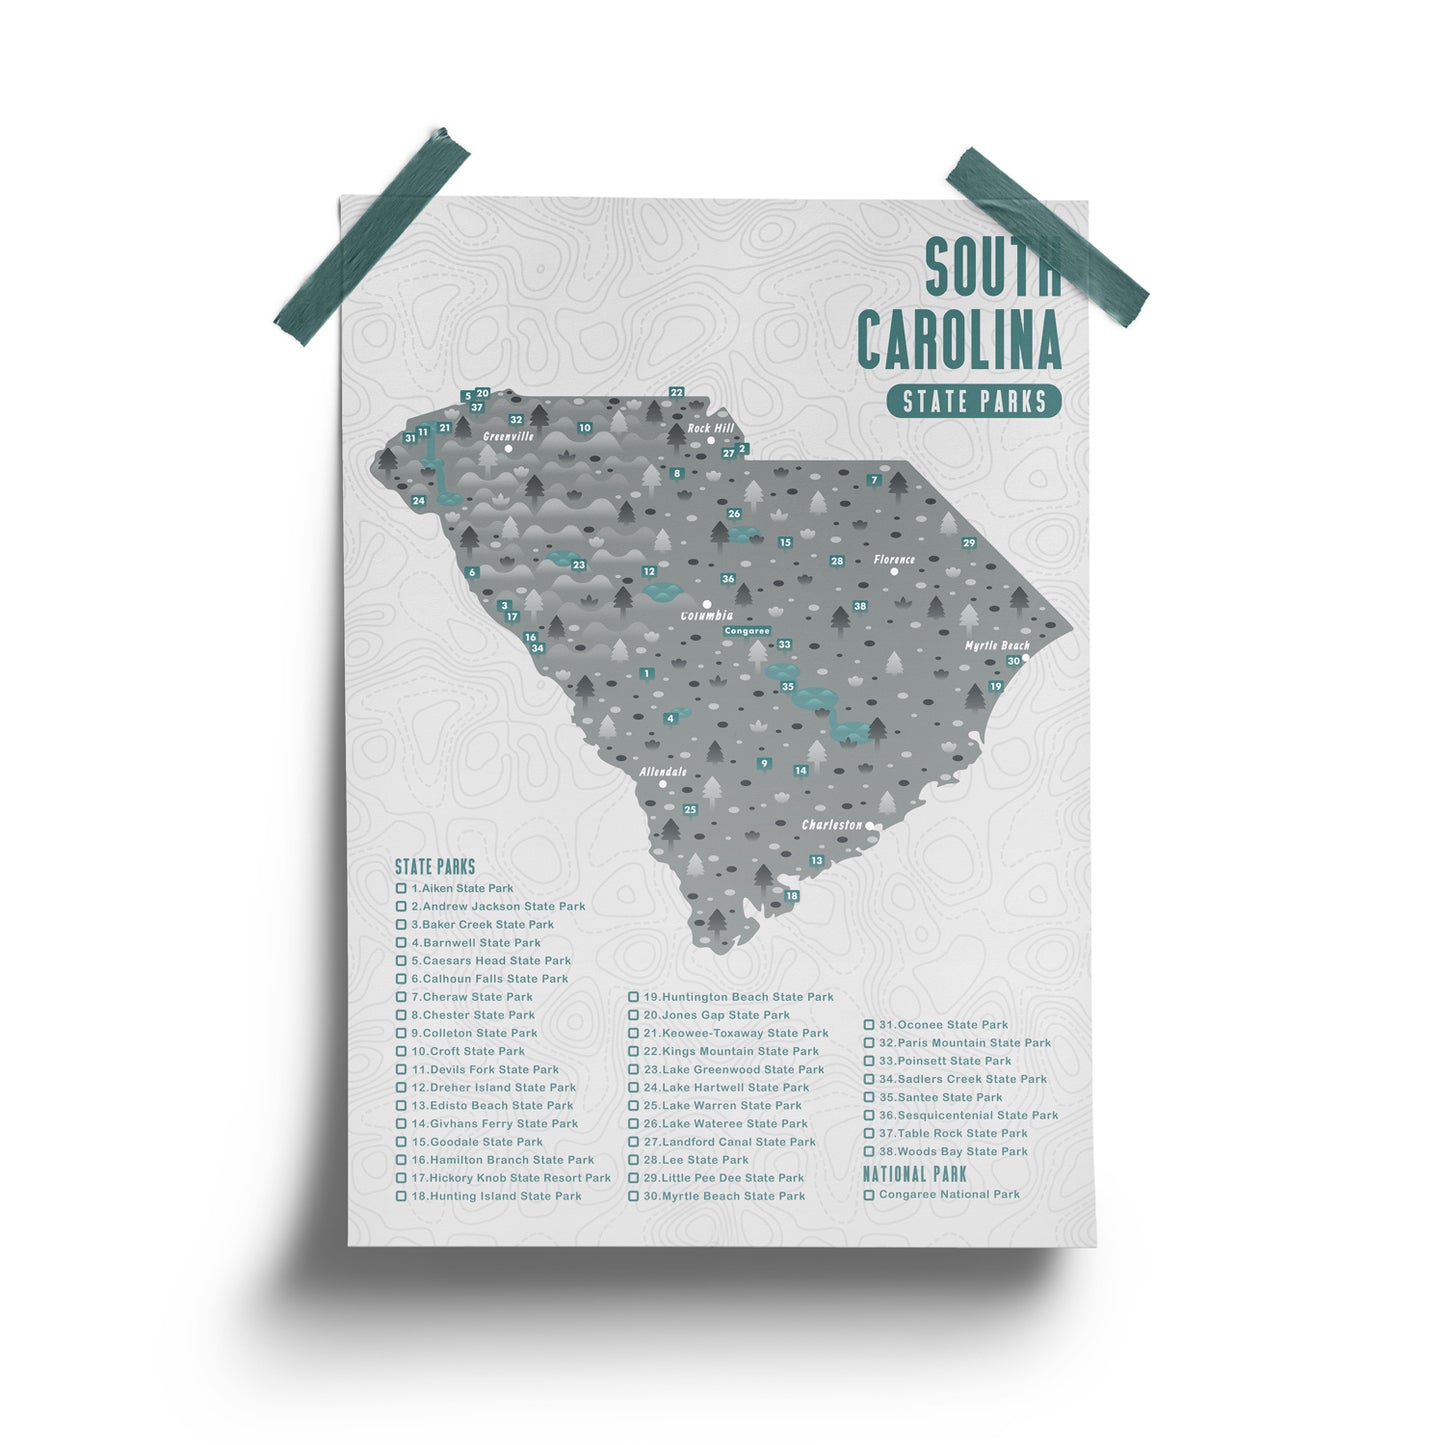 South Carolina State Park Map - Checklist